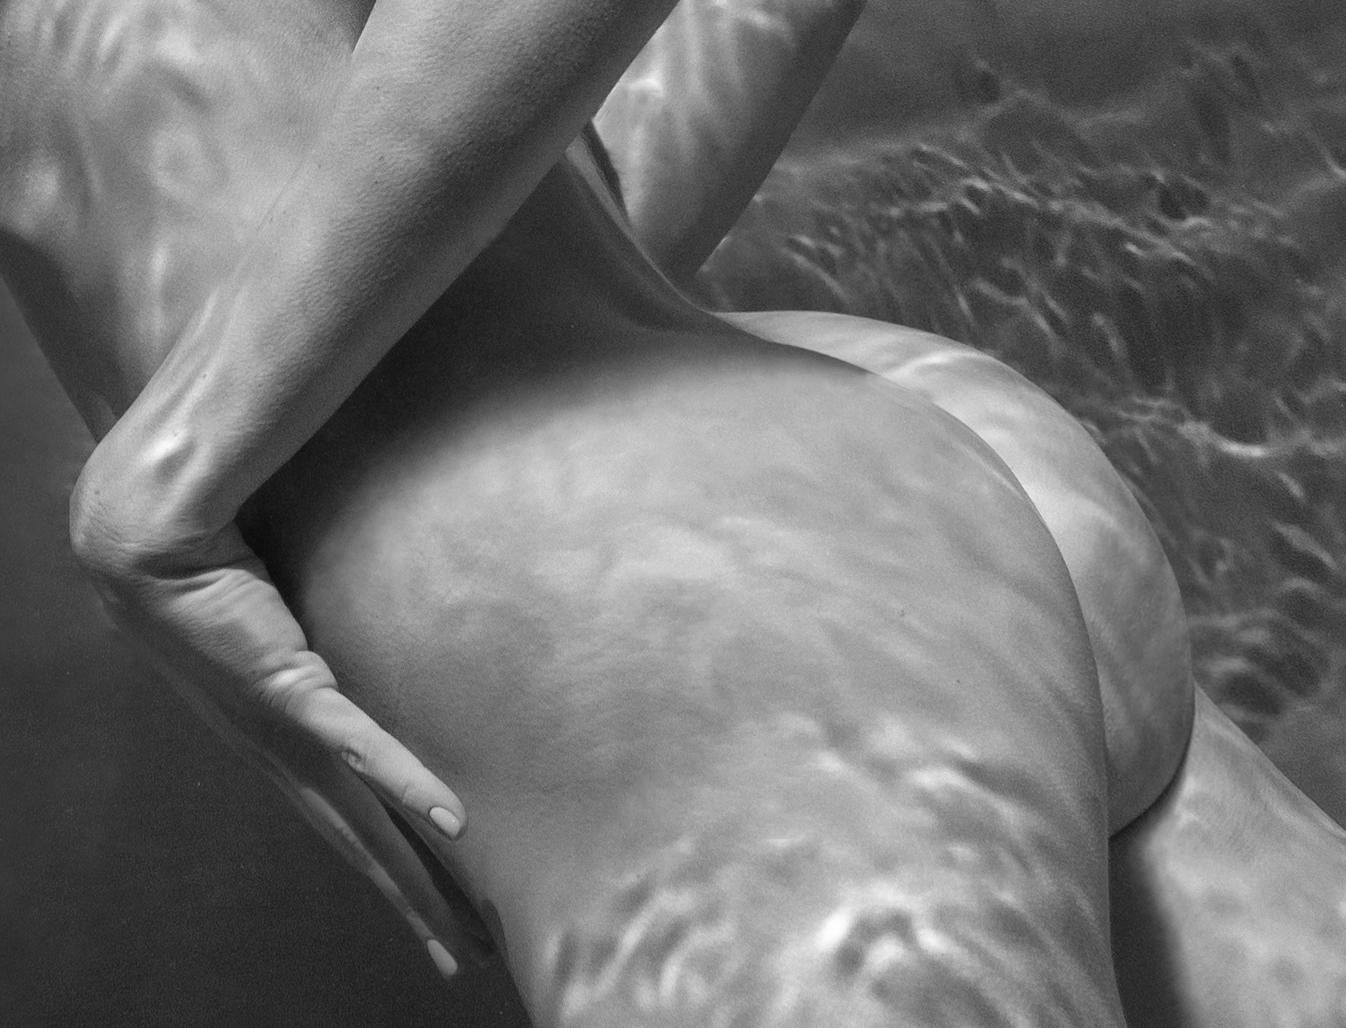 Eyes and Stripes - underwater b&w nude photograph - print on aluminum 36х26